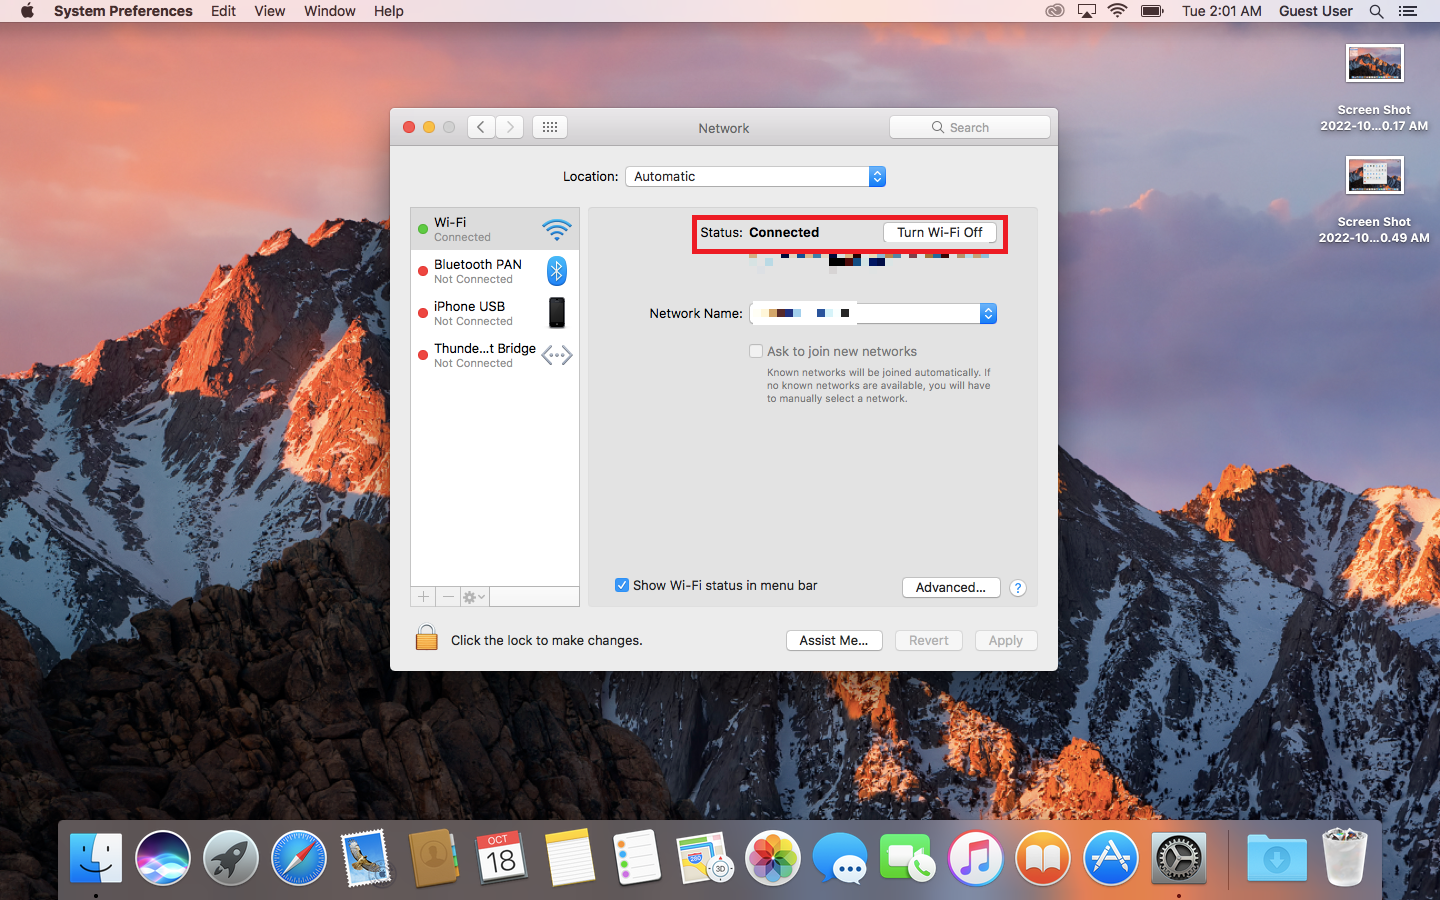 GEARVN - Check trạng thái WiFi trên Macbook